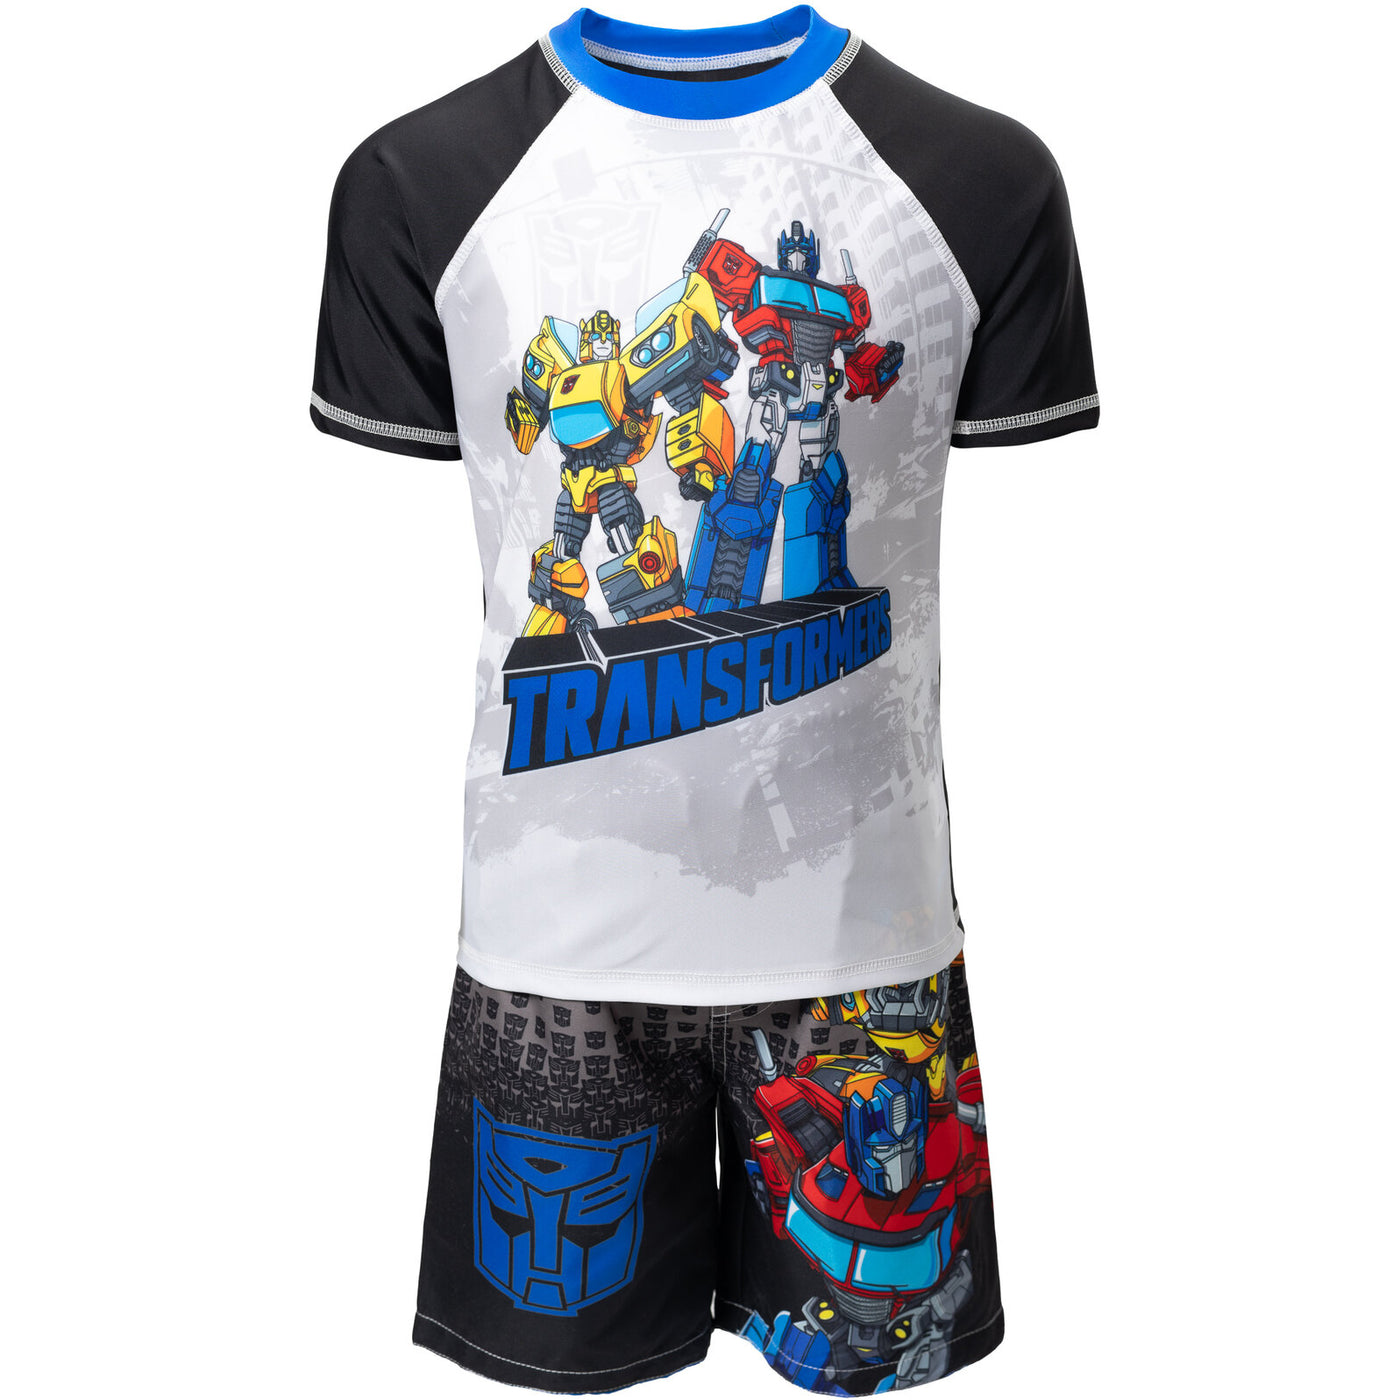 Transformers UPF 50+ Rash Guard Swim Trunks Outfit Set